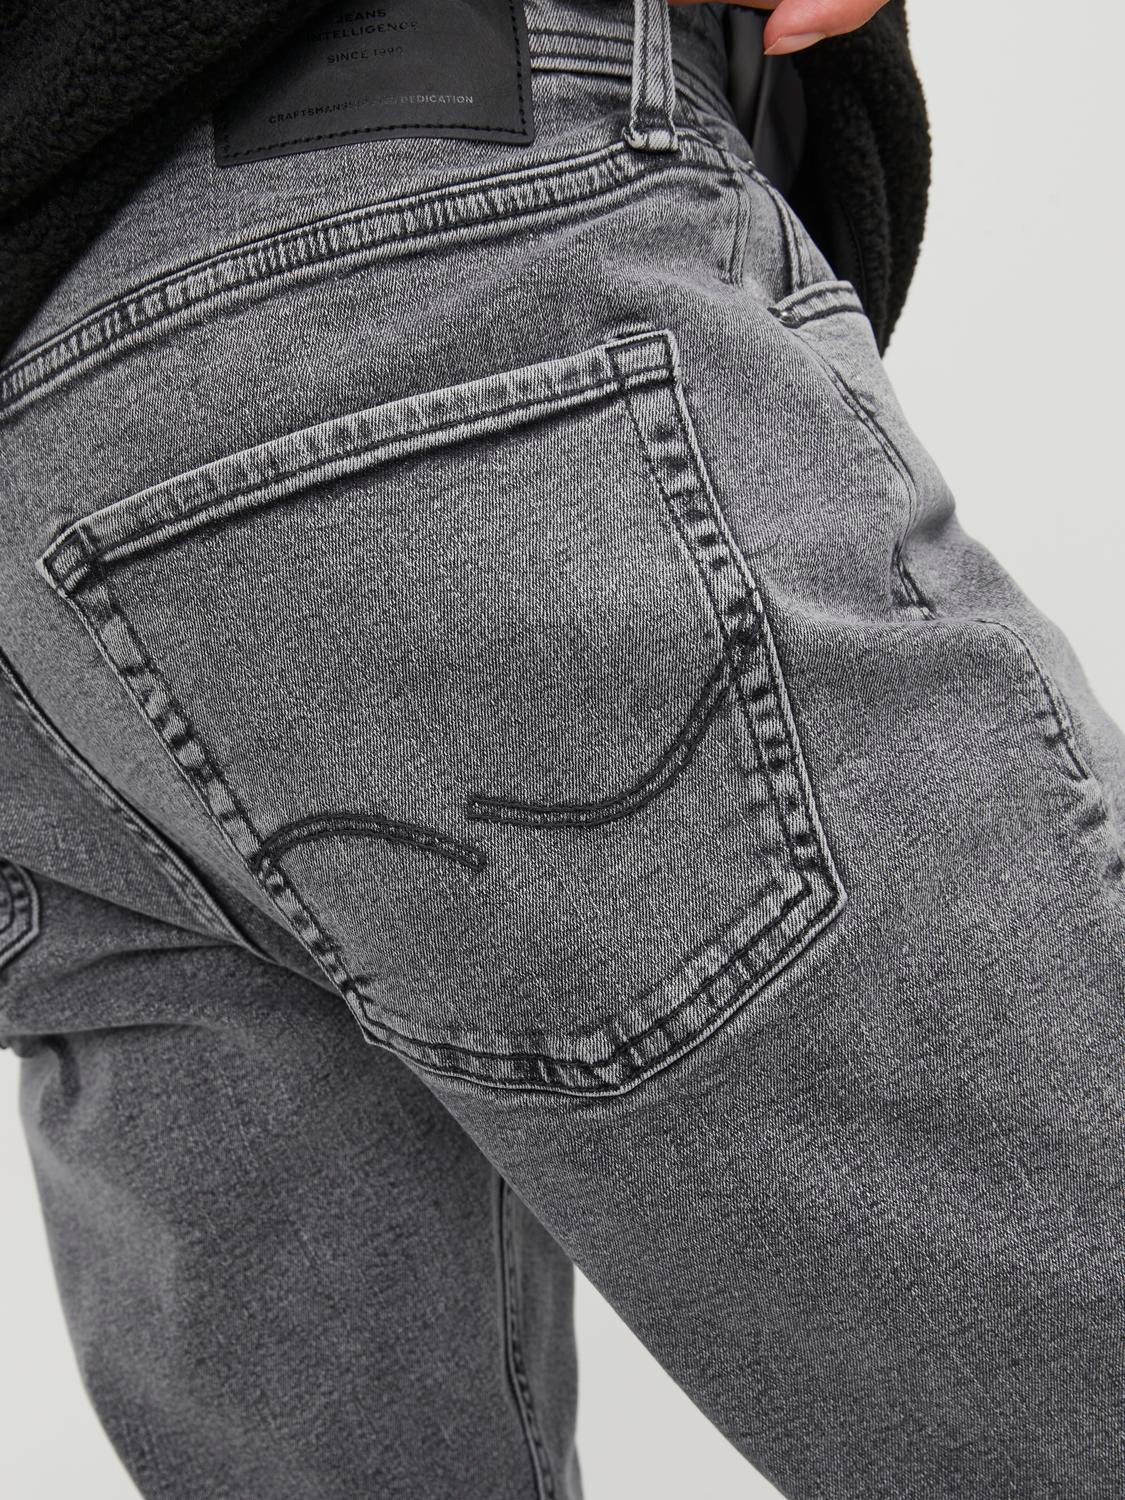 Jack & Jones JJIERIK JJORIGINAL MF 939 EXP Jeans tapered fit -Grey Denim - 12254468